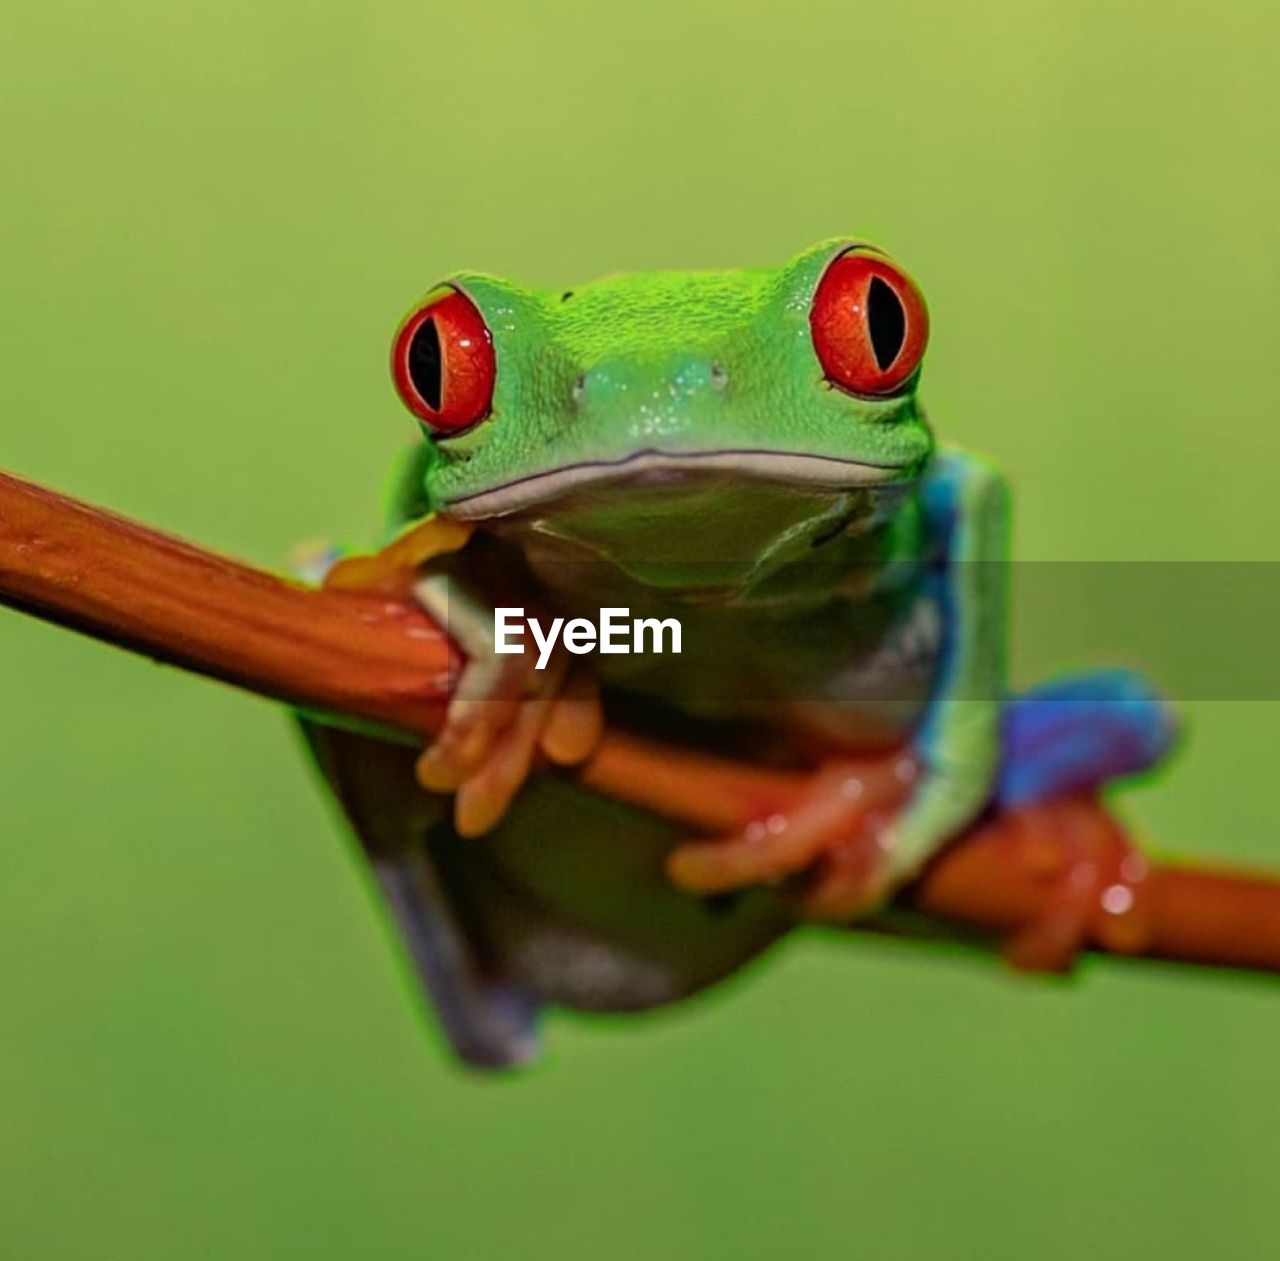 Close-up portrait of a frog